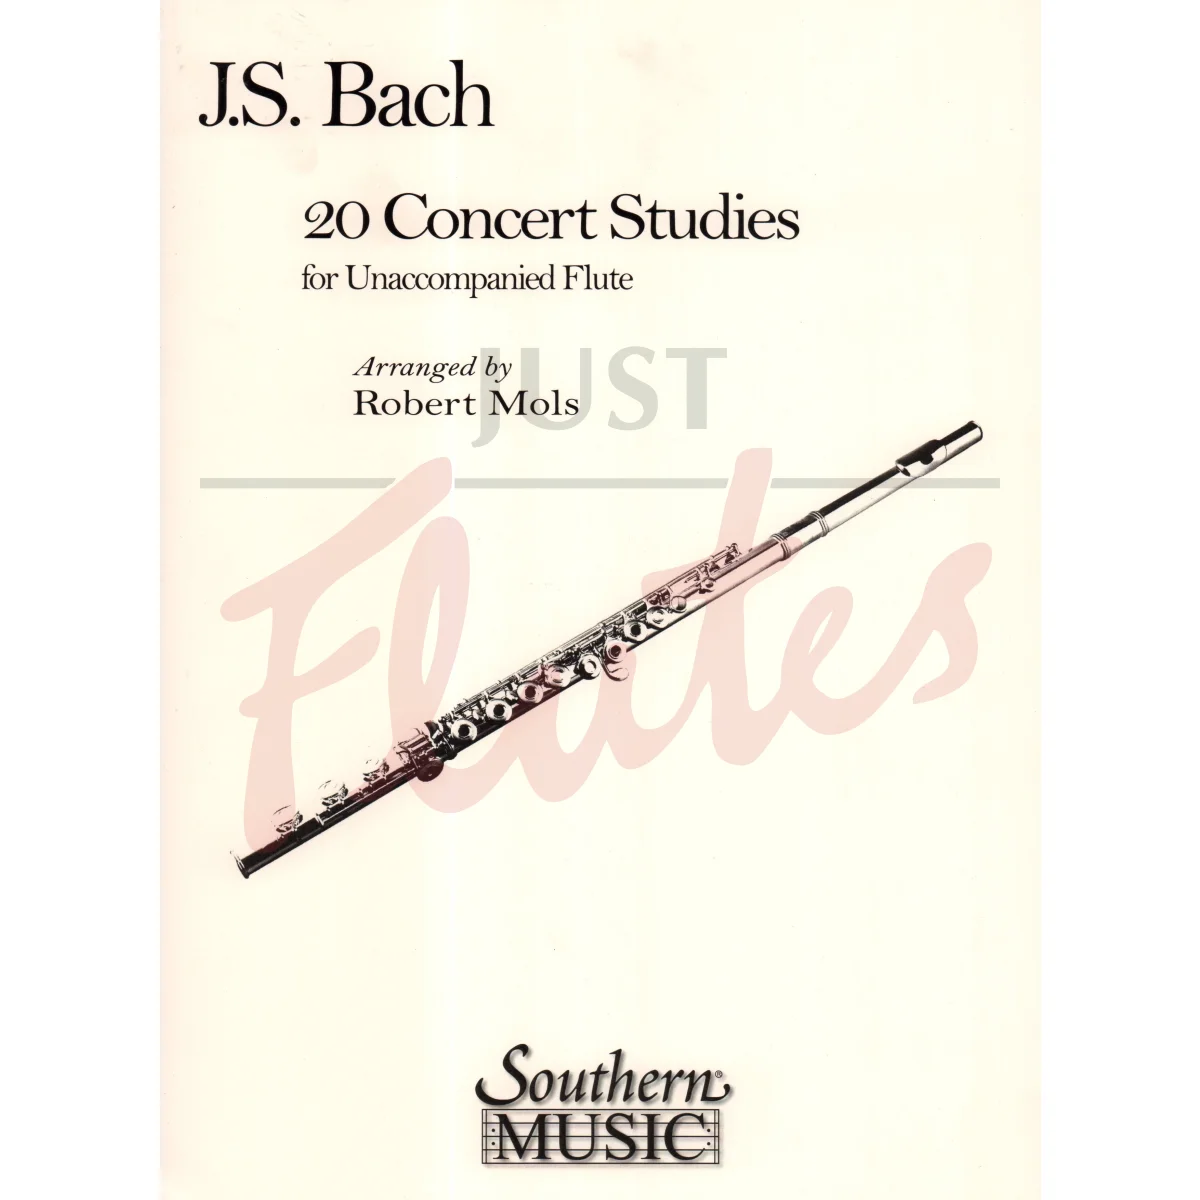 20 Concert Studies for Unaccompanied Flute